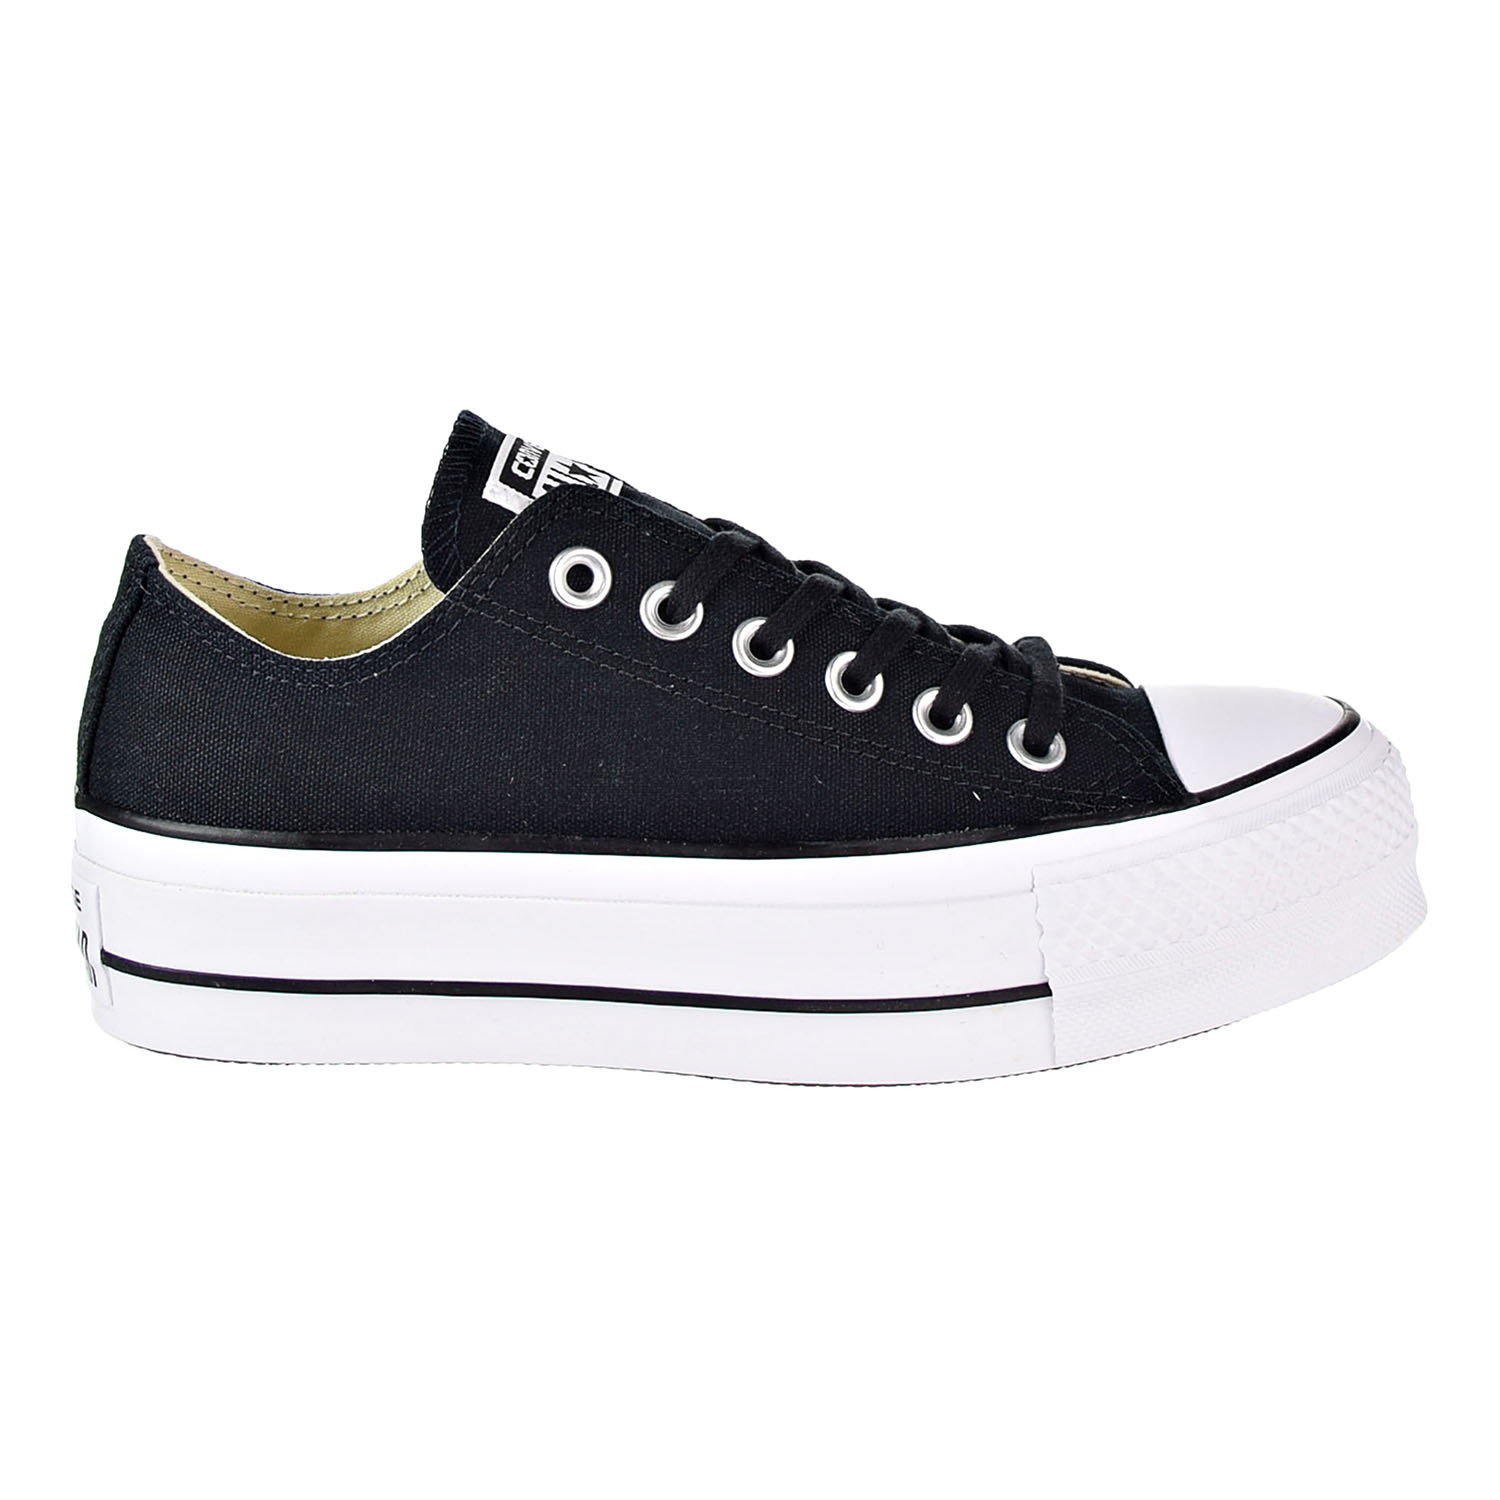 Converse Chuck Taylor All Star Lift Ox Women's Shoes Black/White 560250c